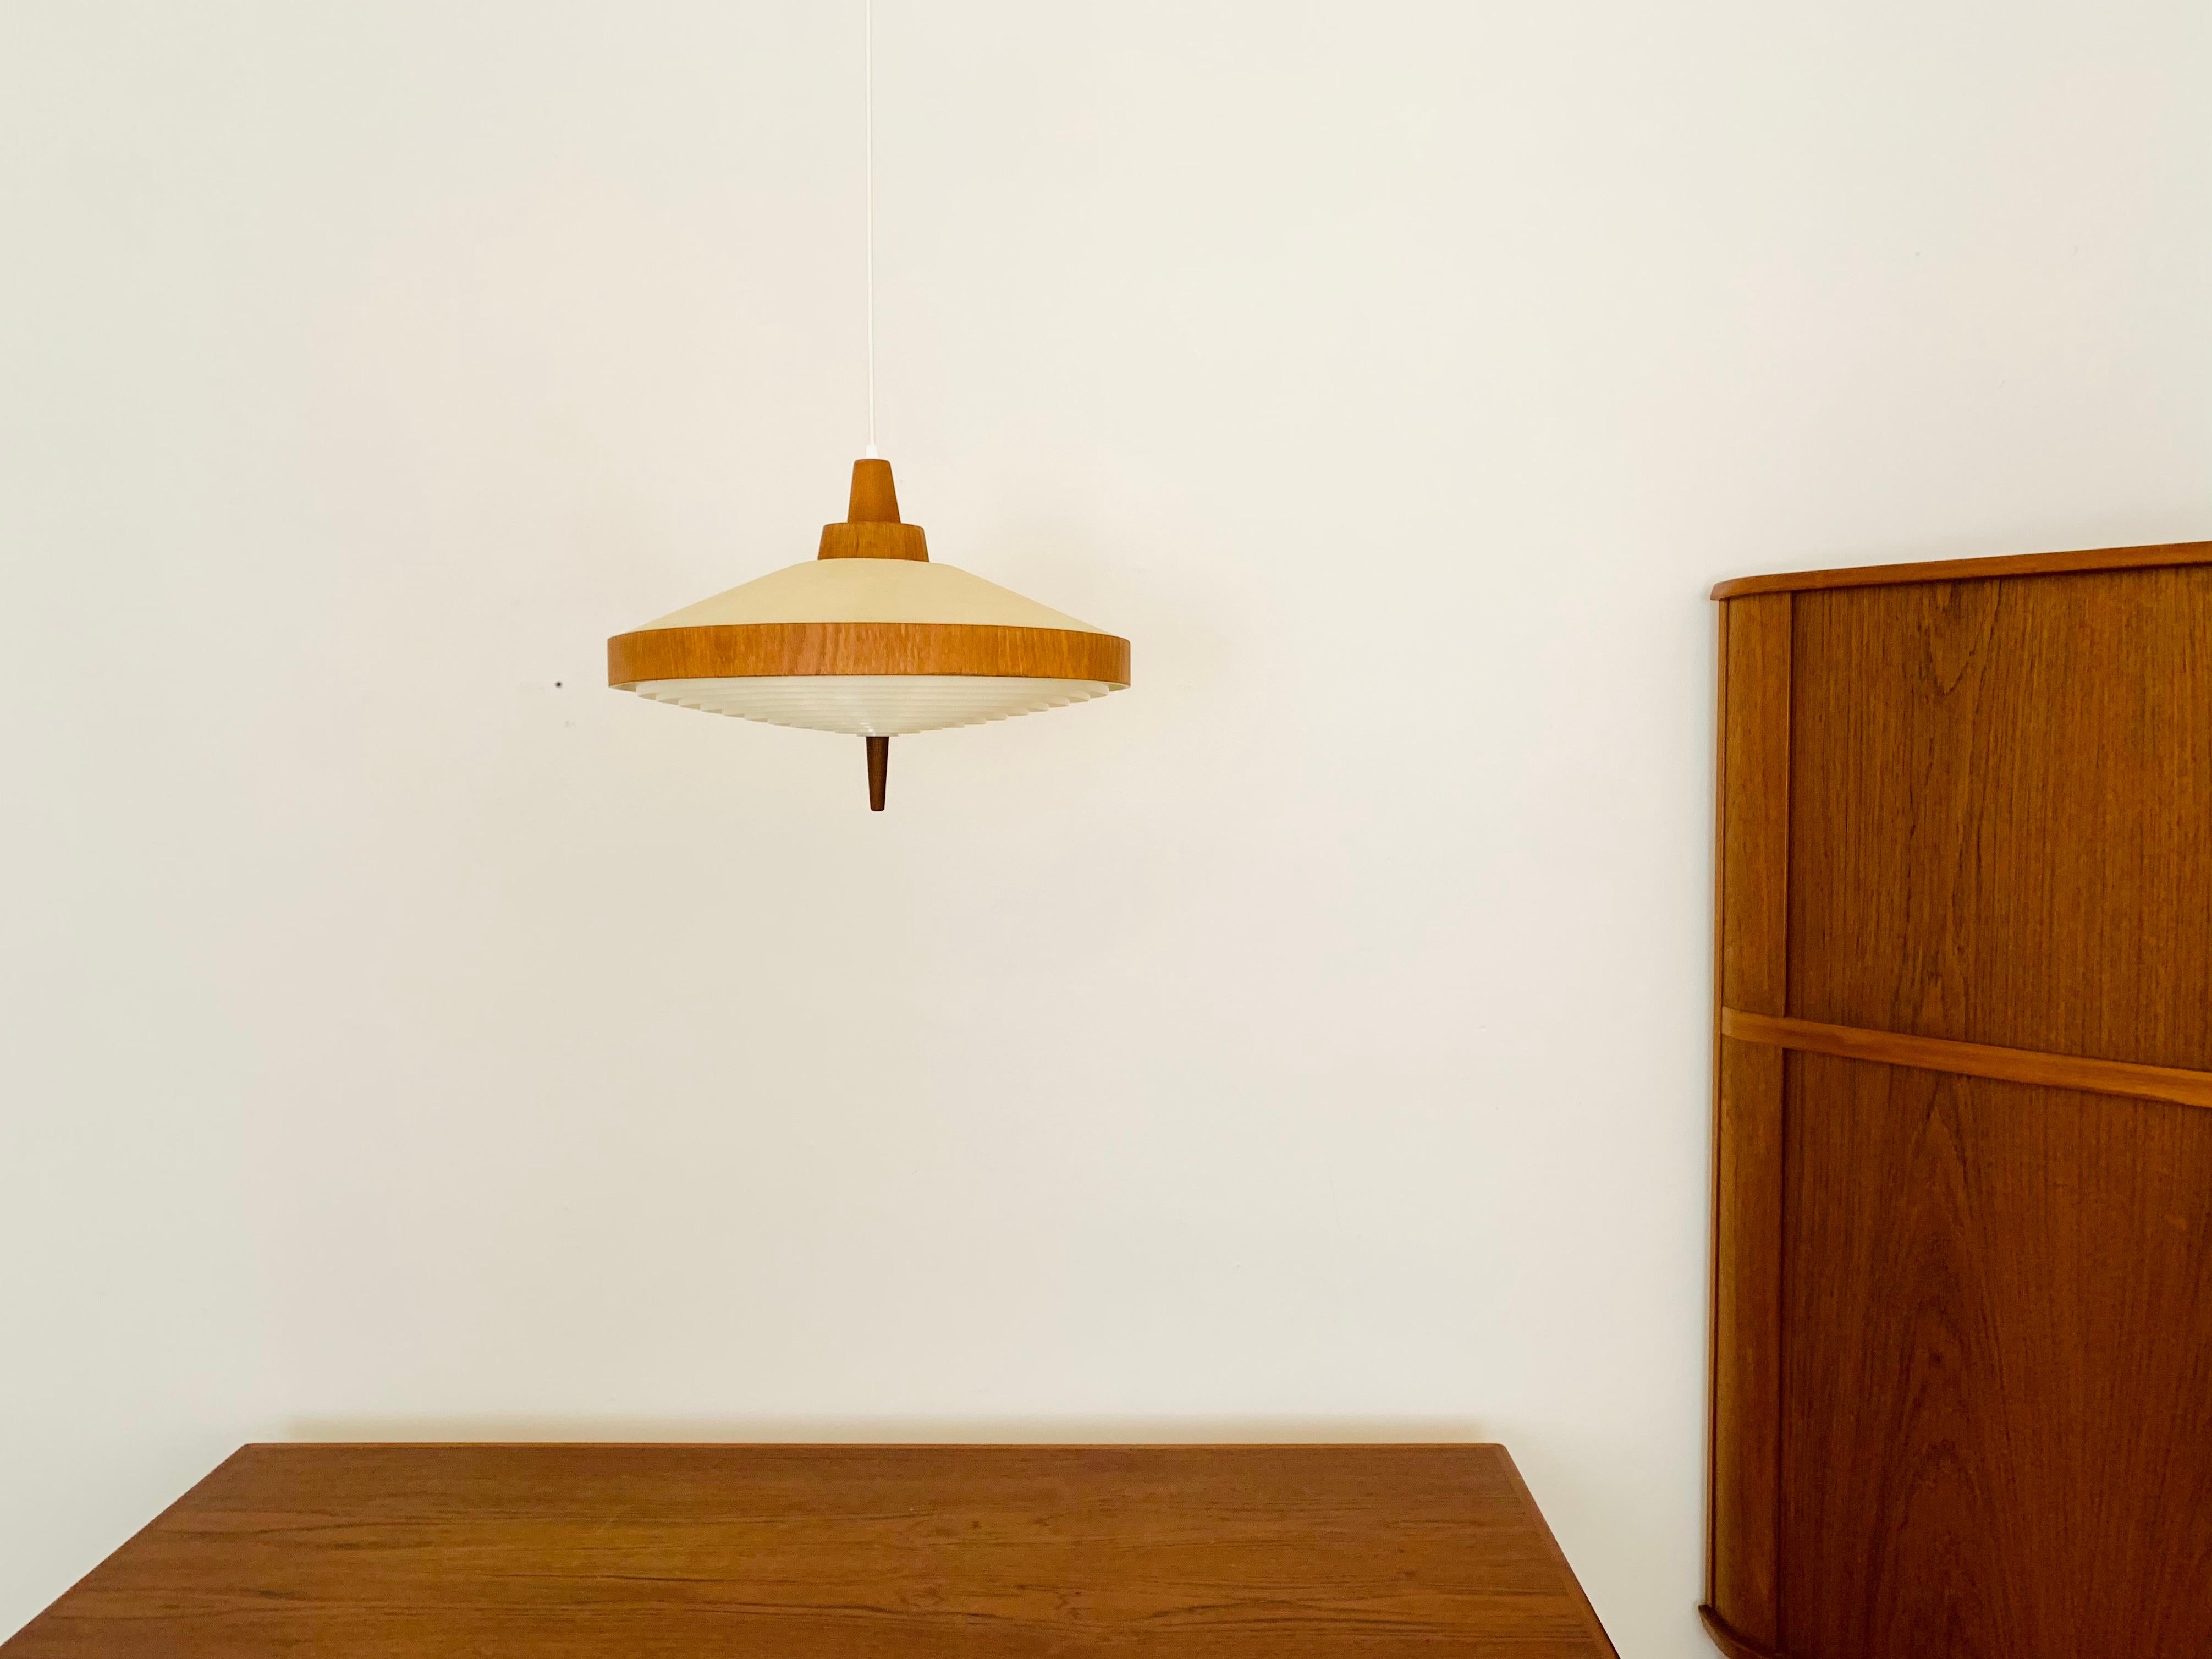 Teak Pendant Lamp by Temde In Good Condition For Sale In München, DE